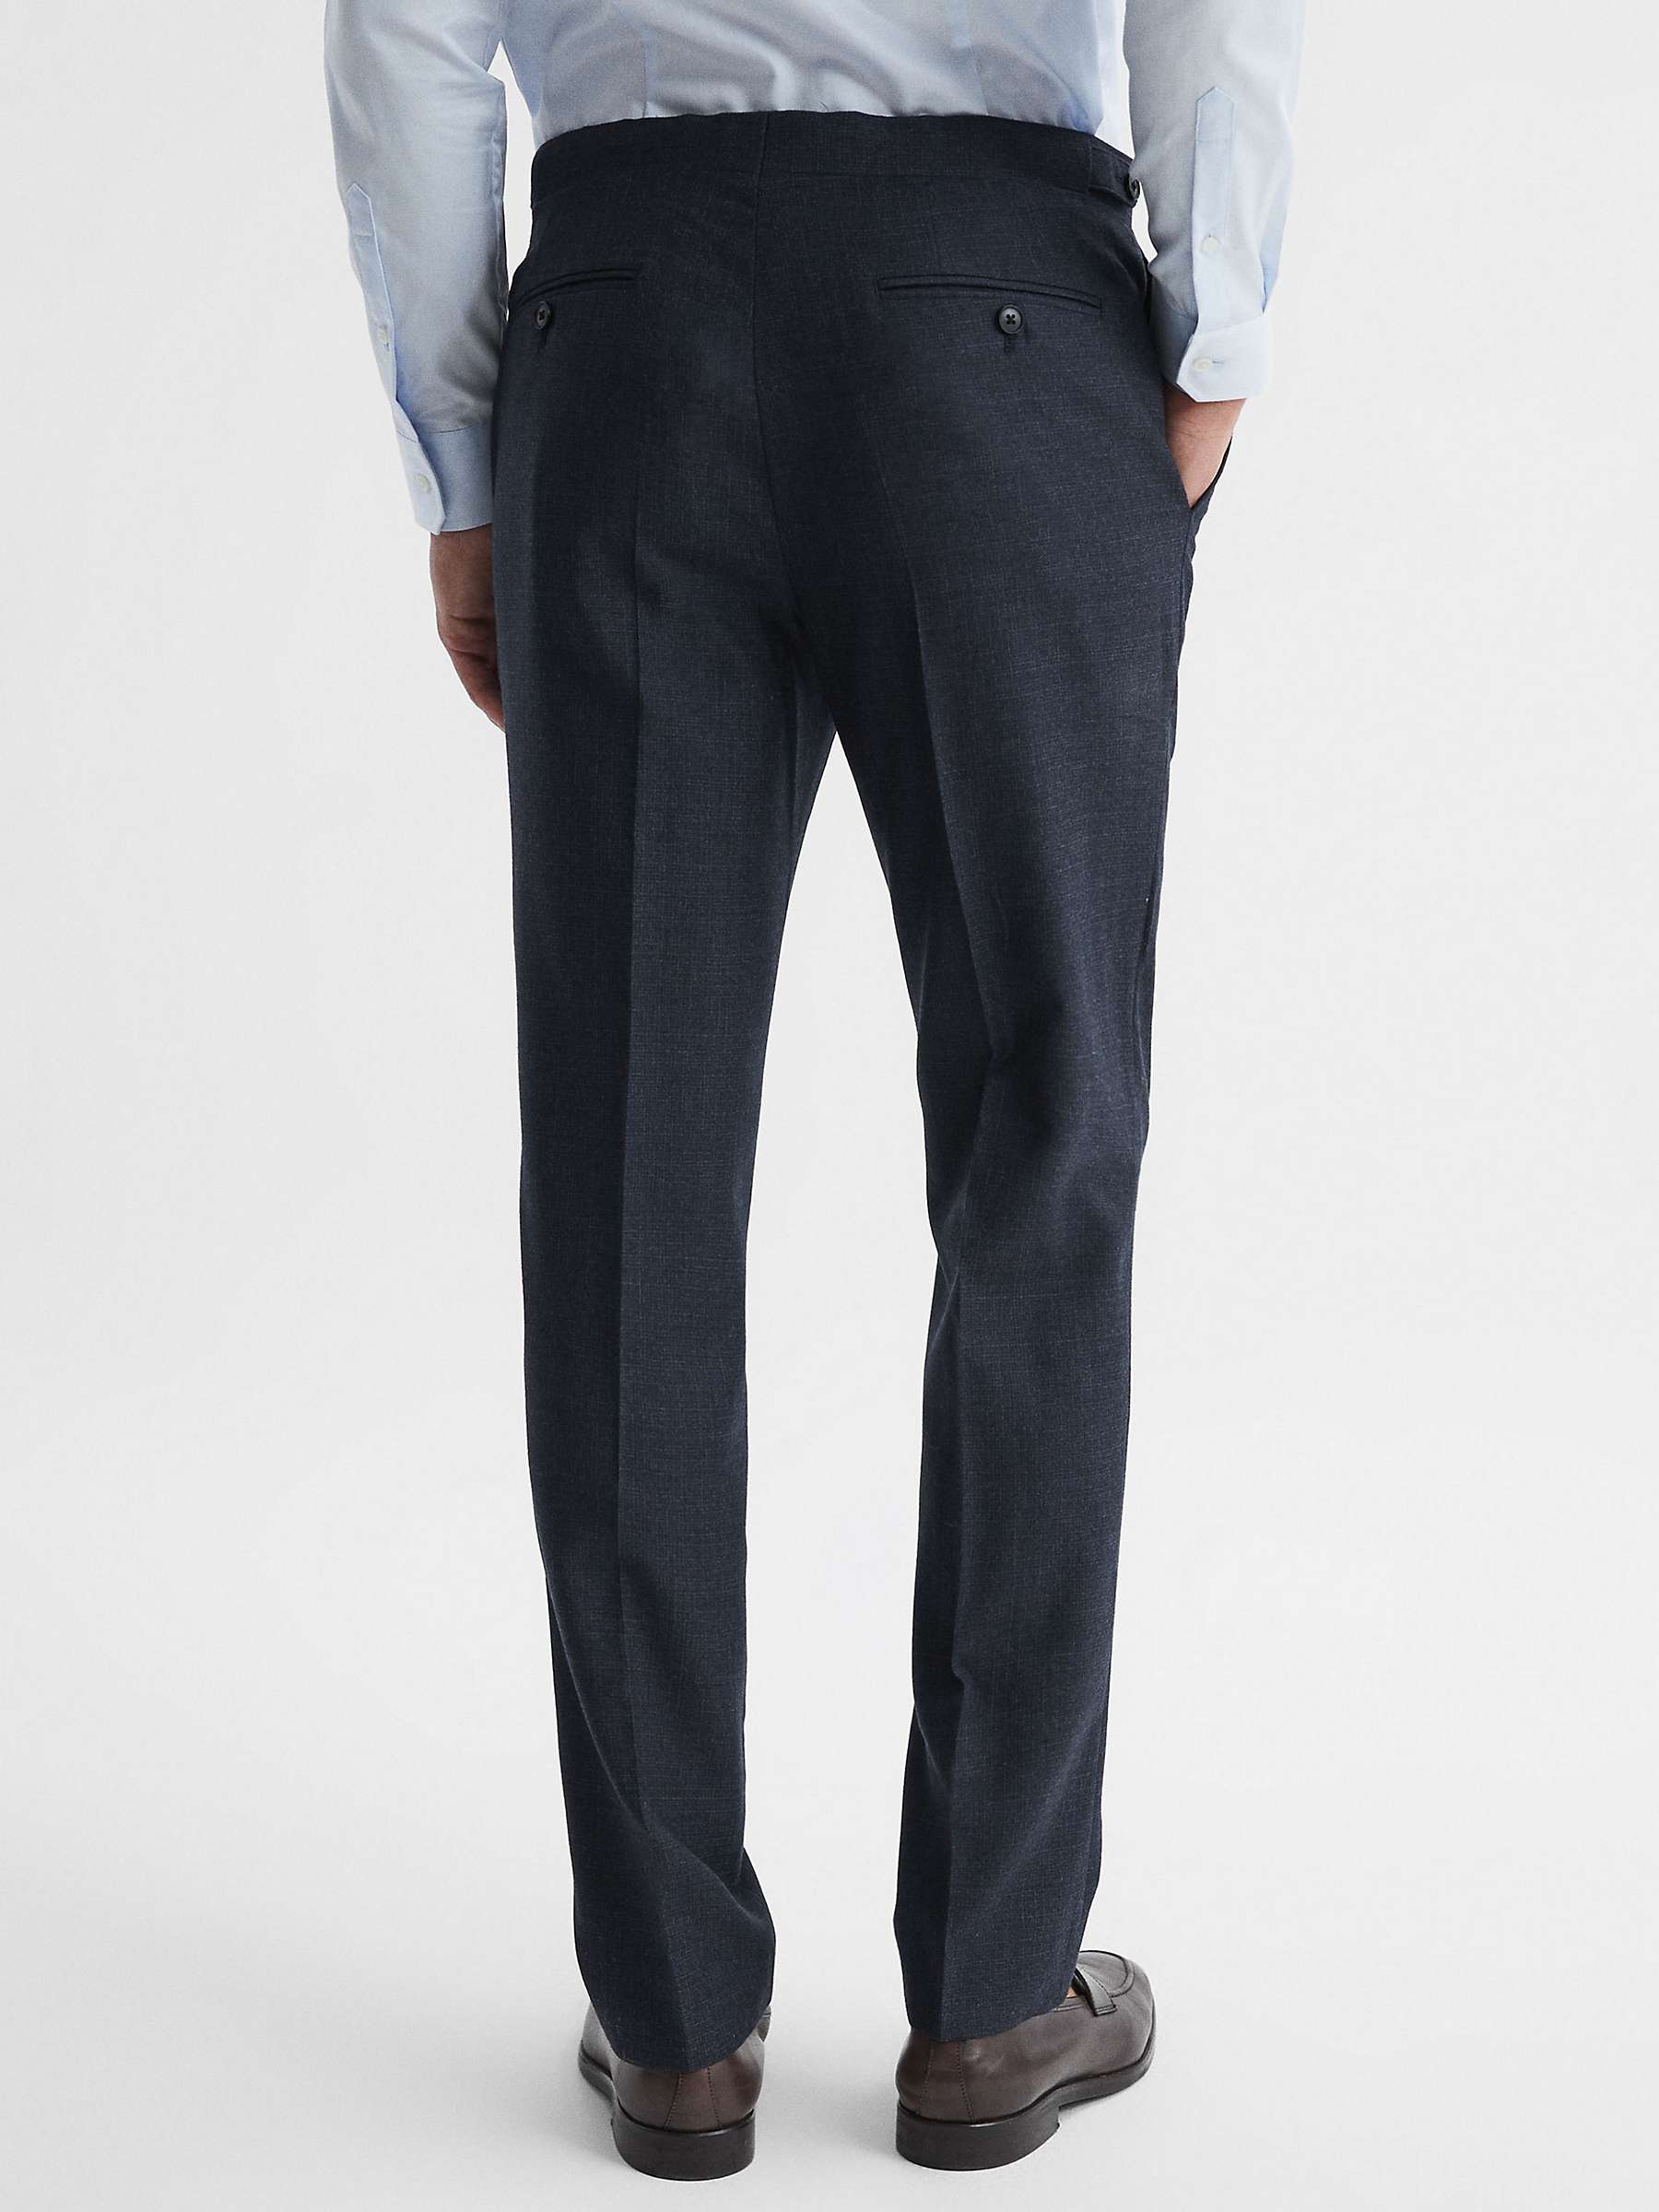 Buy Reiss Dunn Cross Fleck Textured Trousers, Navy Online at johnlewis.com